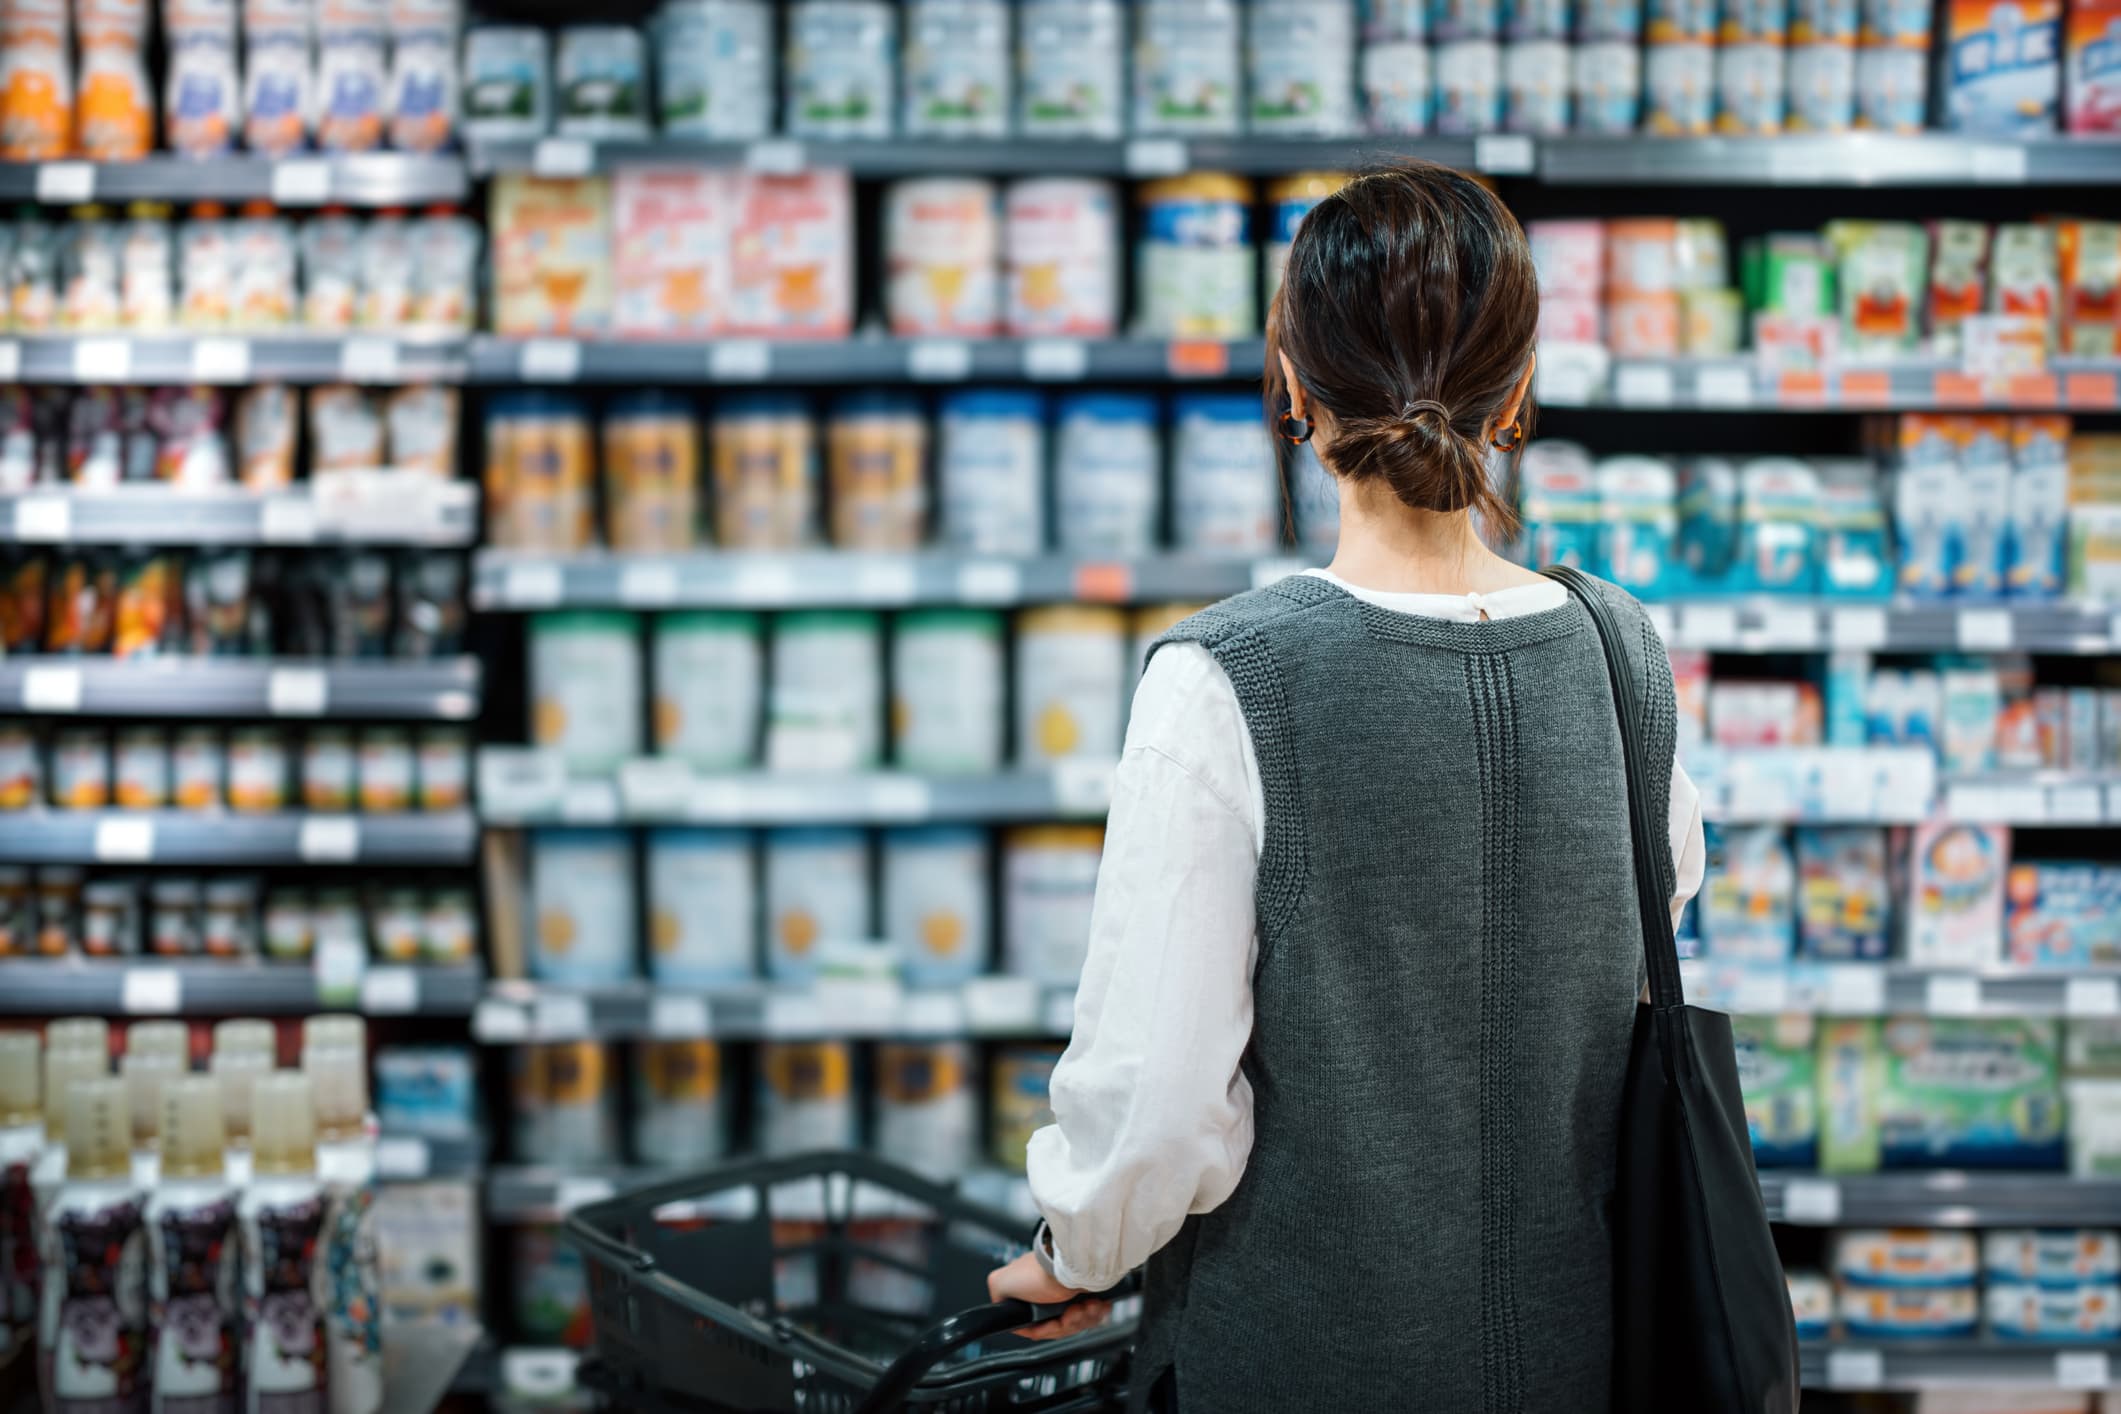 Low-cost supermarket savings